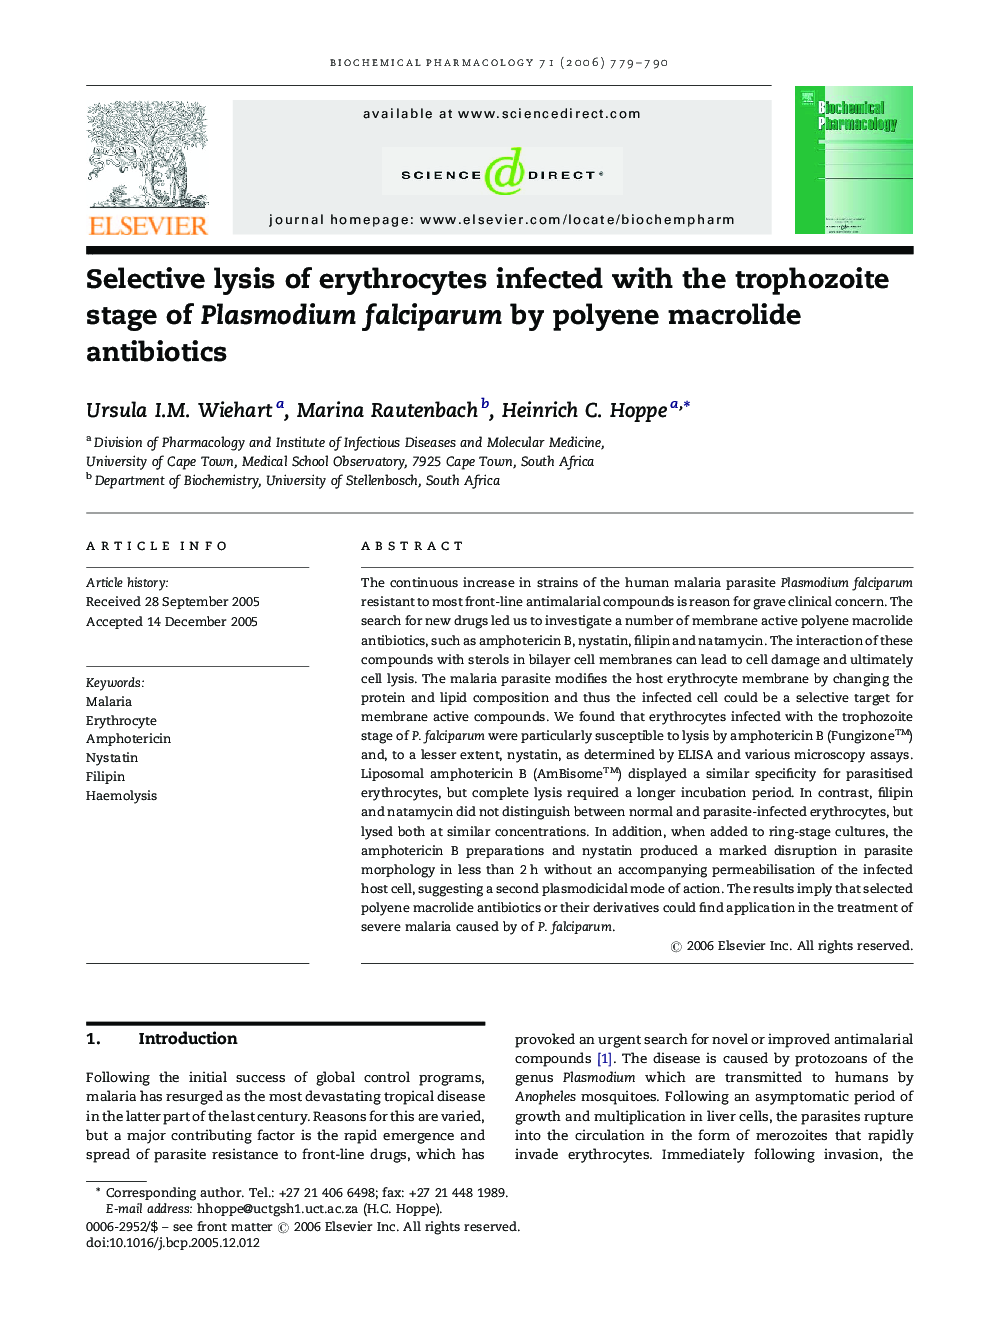 Selective lysis of erythrocytes infected with the trophozoite stage of Plasmodium falciparum by polyene macrolide antibiotics